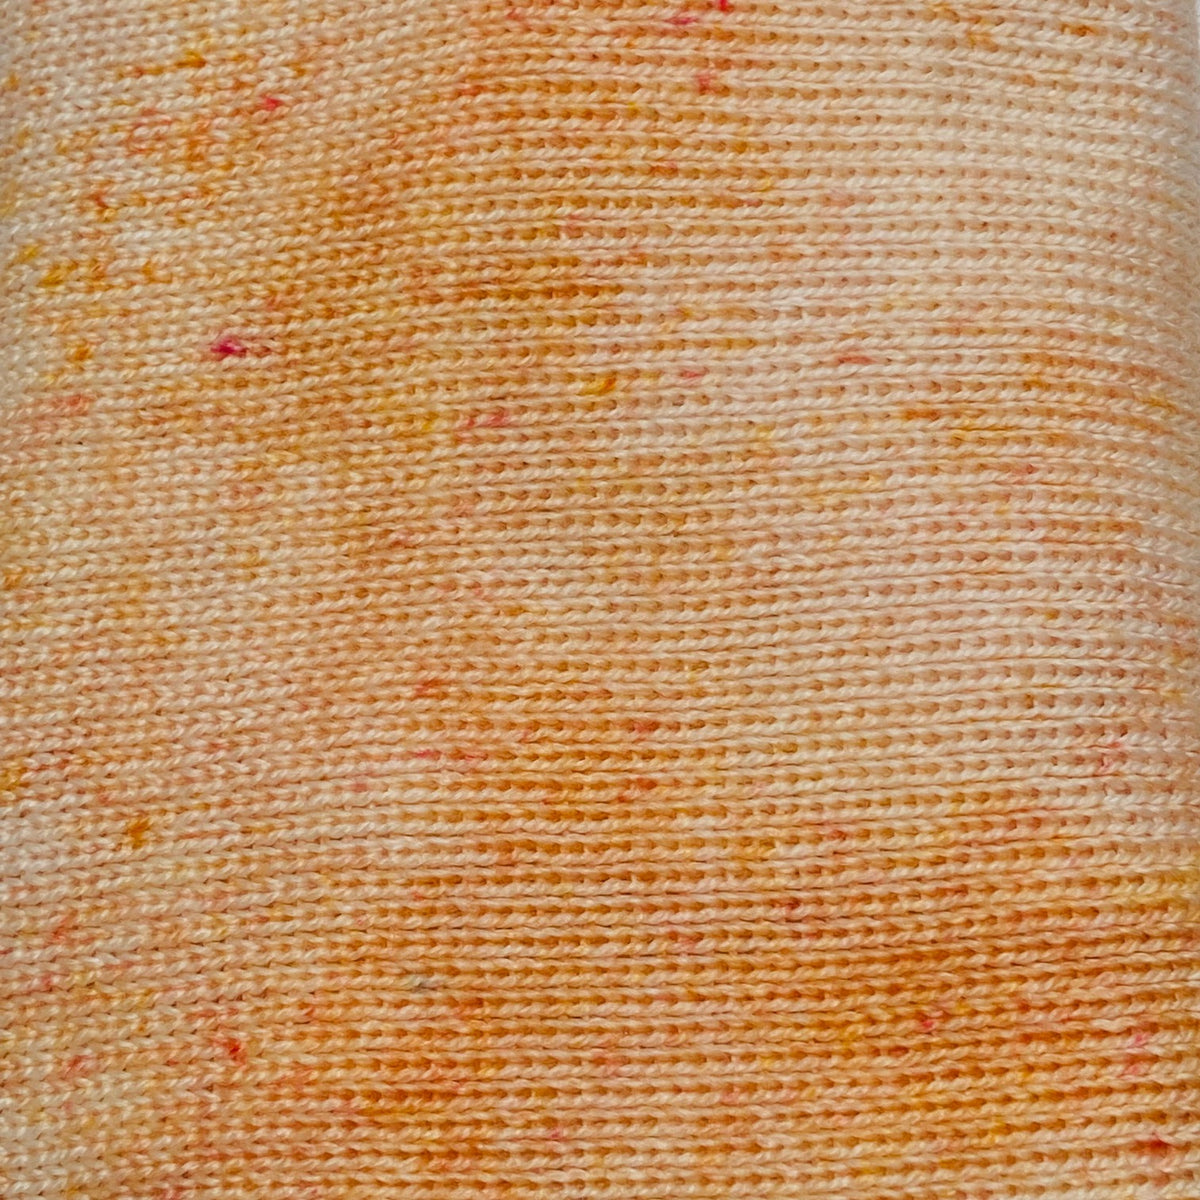 Fibrland - Lace Single knit sock blank